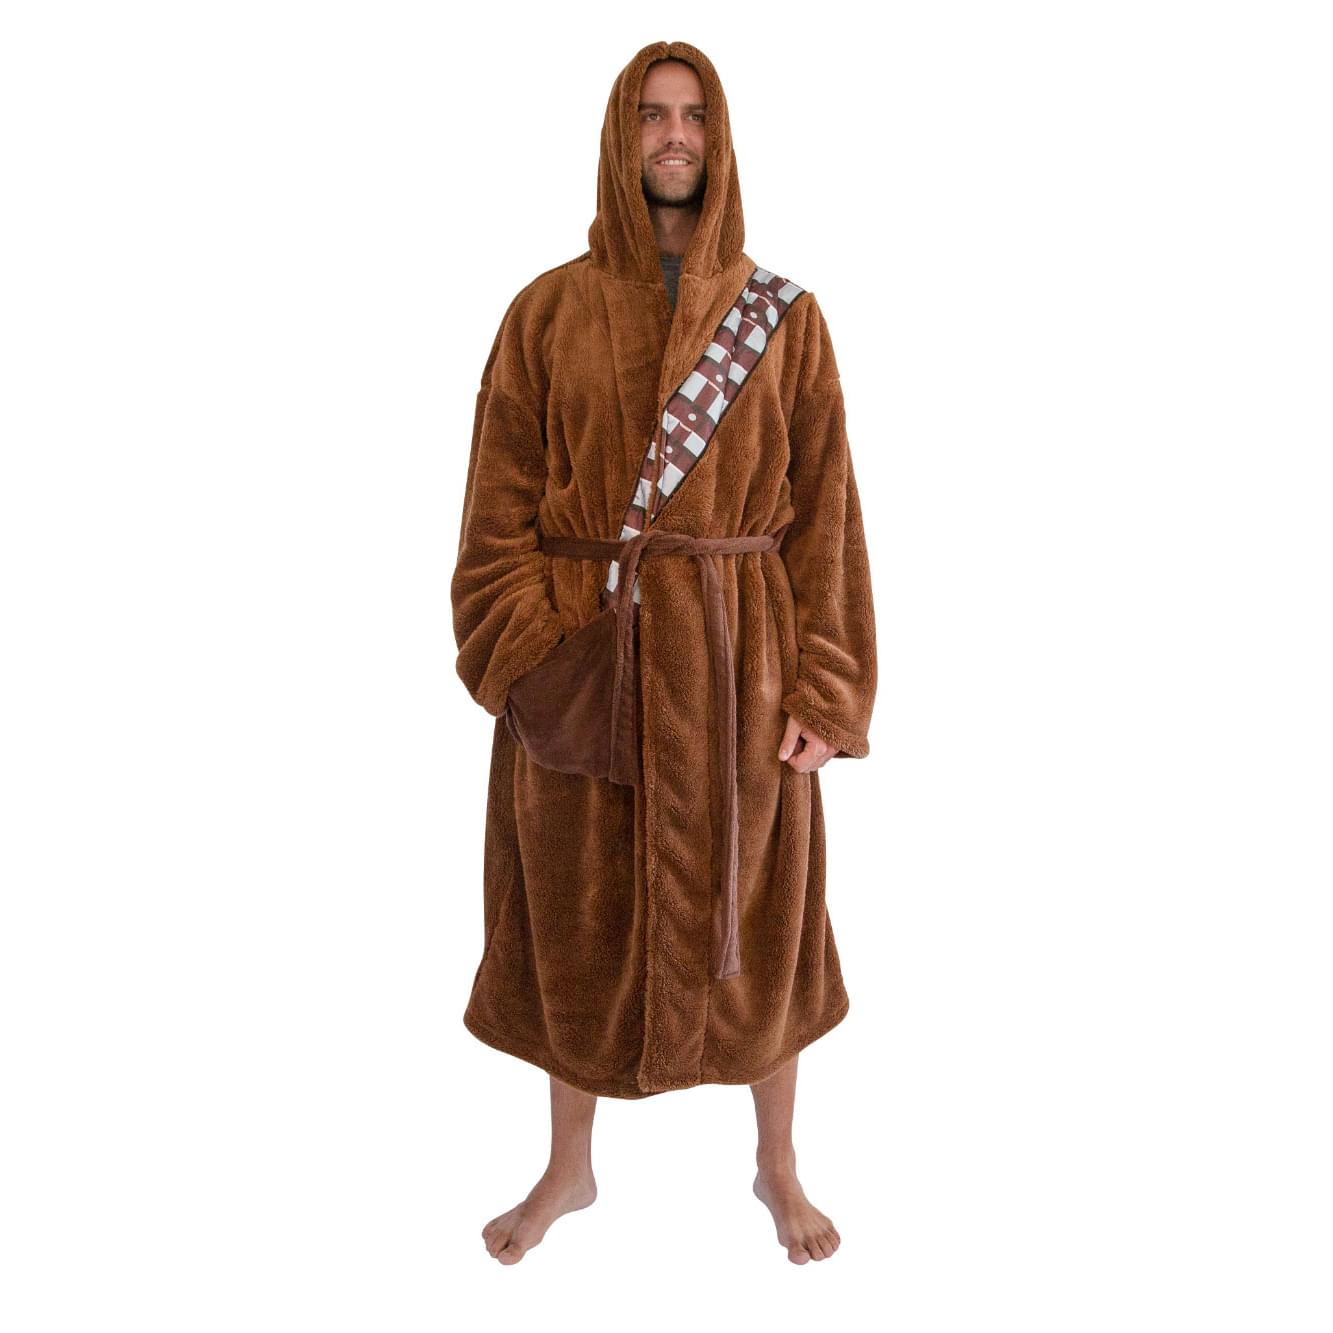 Star Wars Chewbacca Hooded Bathrobe For Adults , Big And Tall XXXL